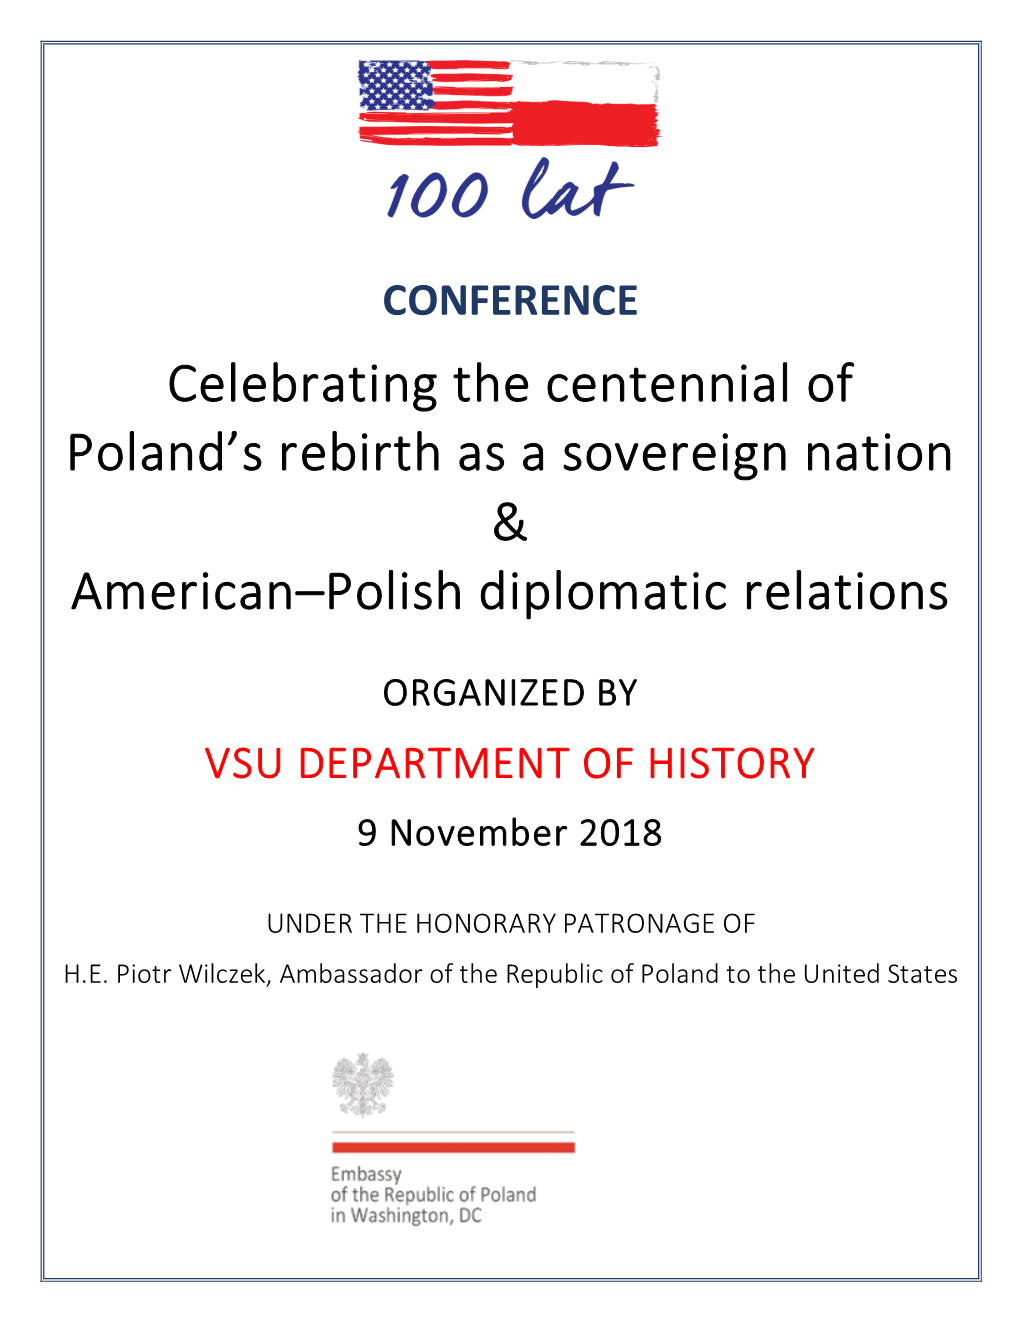 Celebrating the Centennial of Poland's Rebirth As a Sovereign Nation